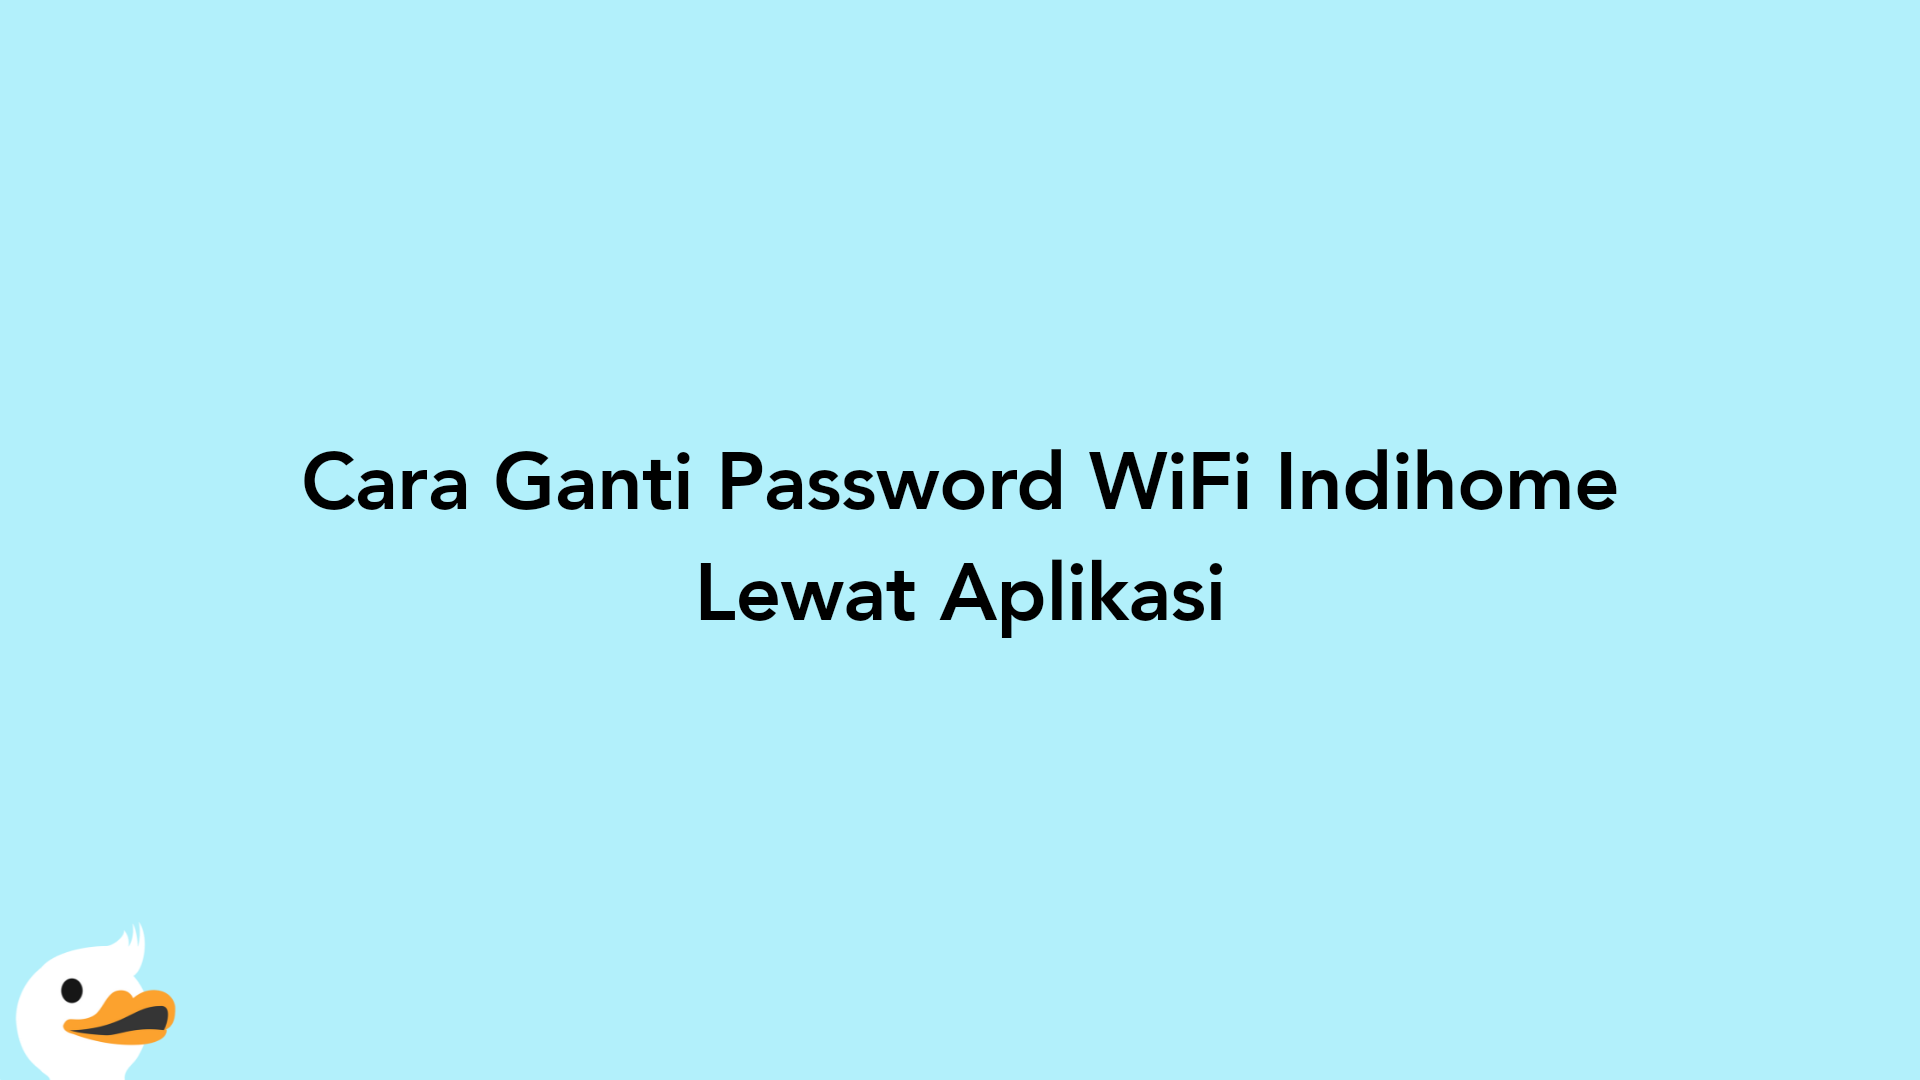 Cara Ganti Password WiFi Indihome Lewat Aplikasi